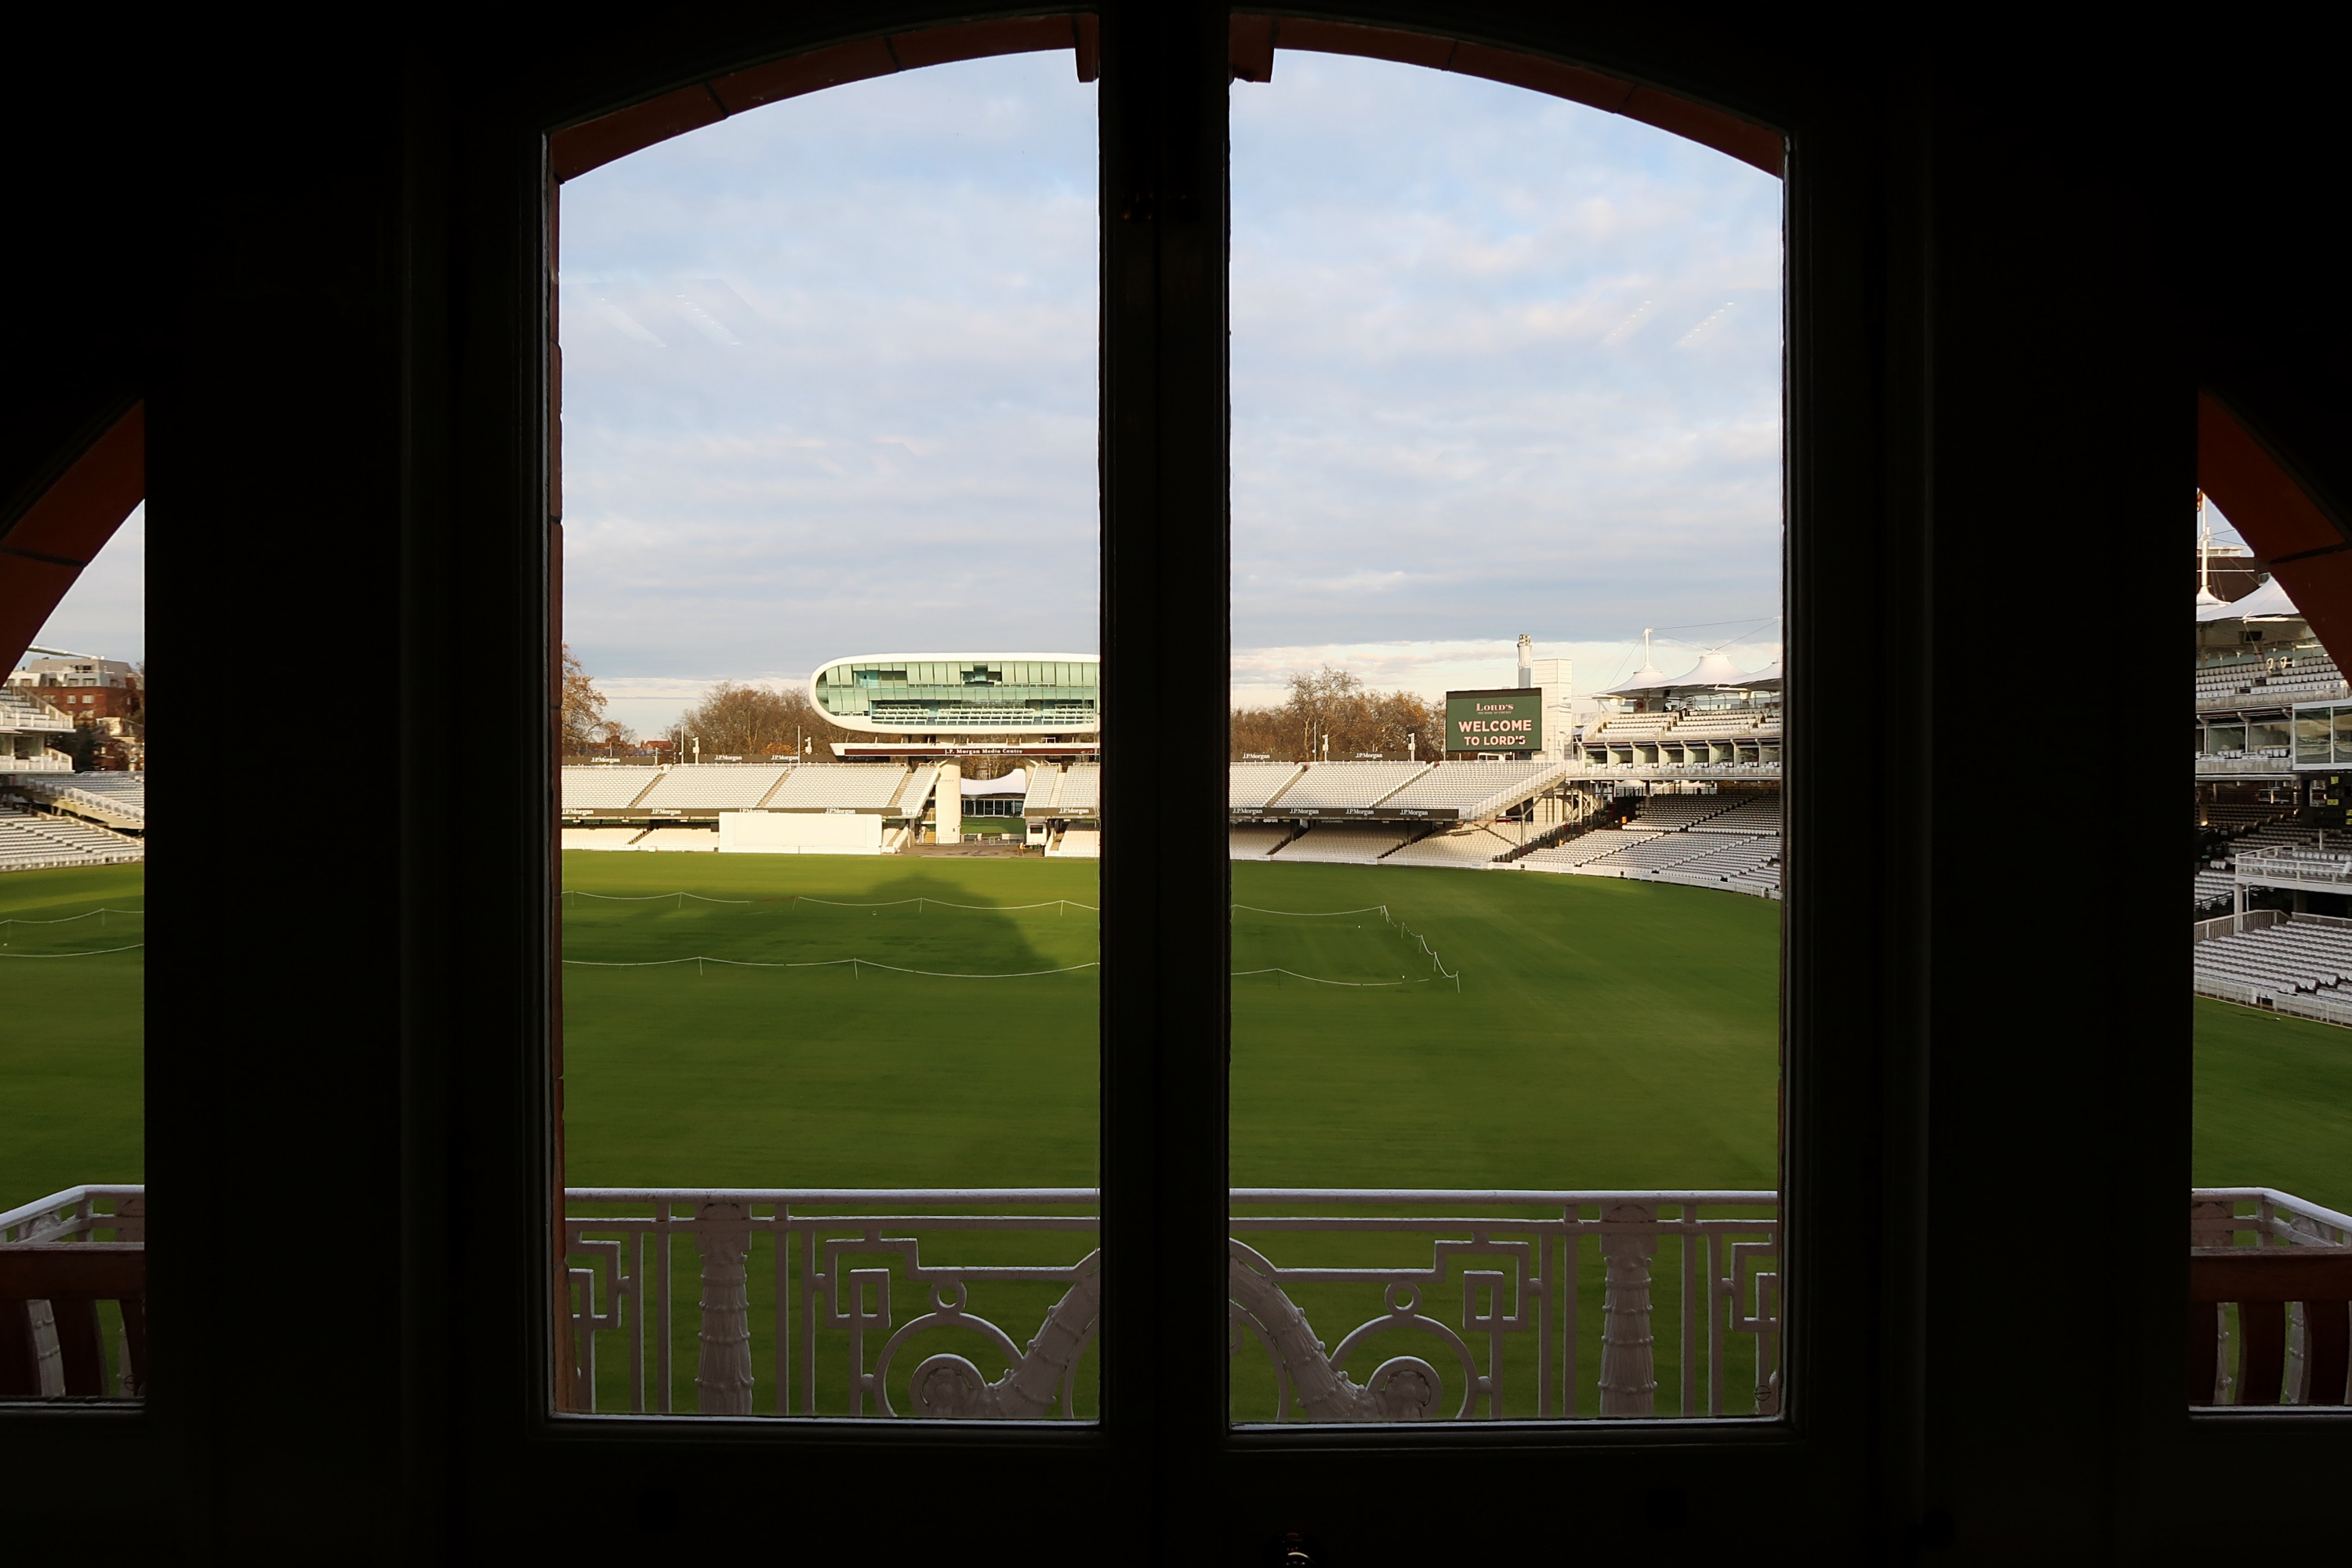 Lord's Cricket Club